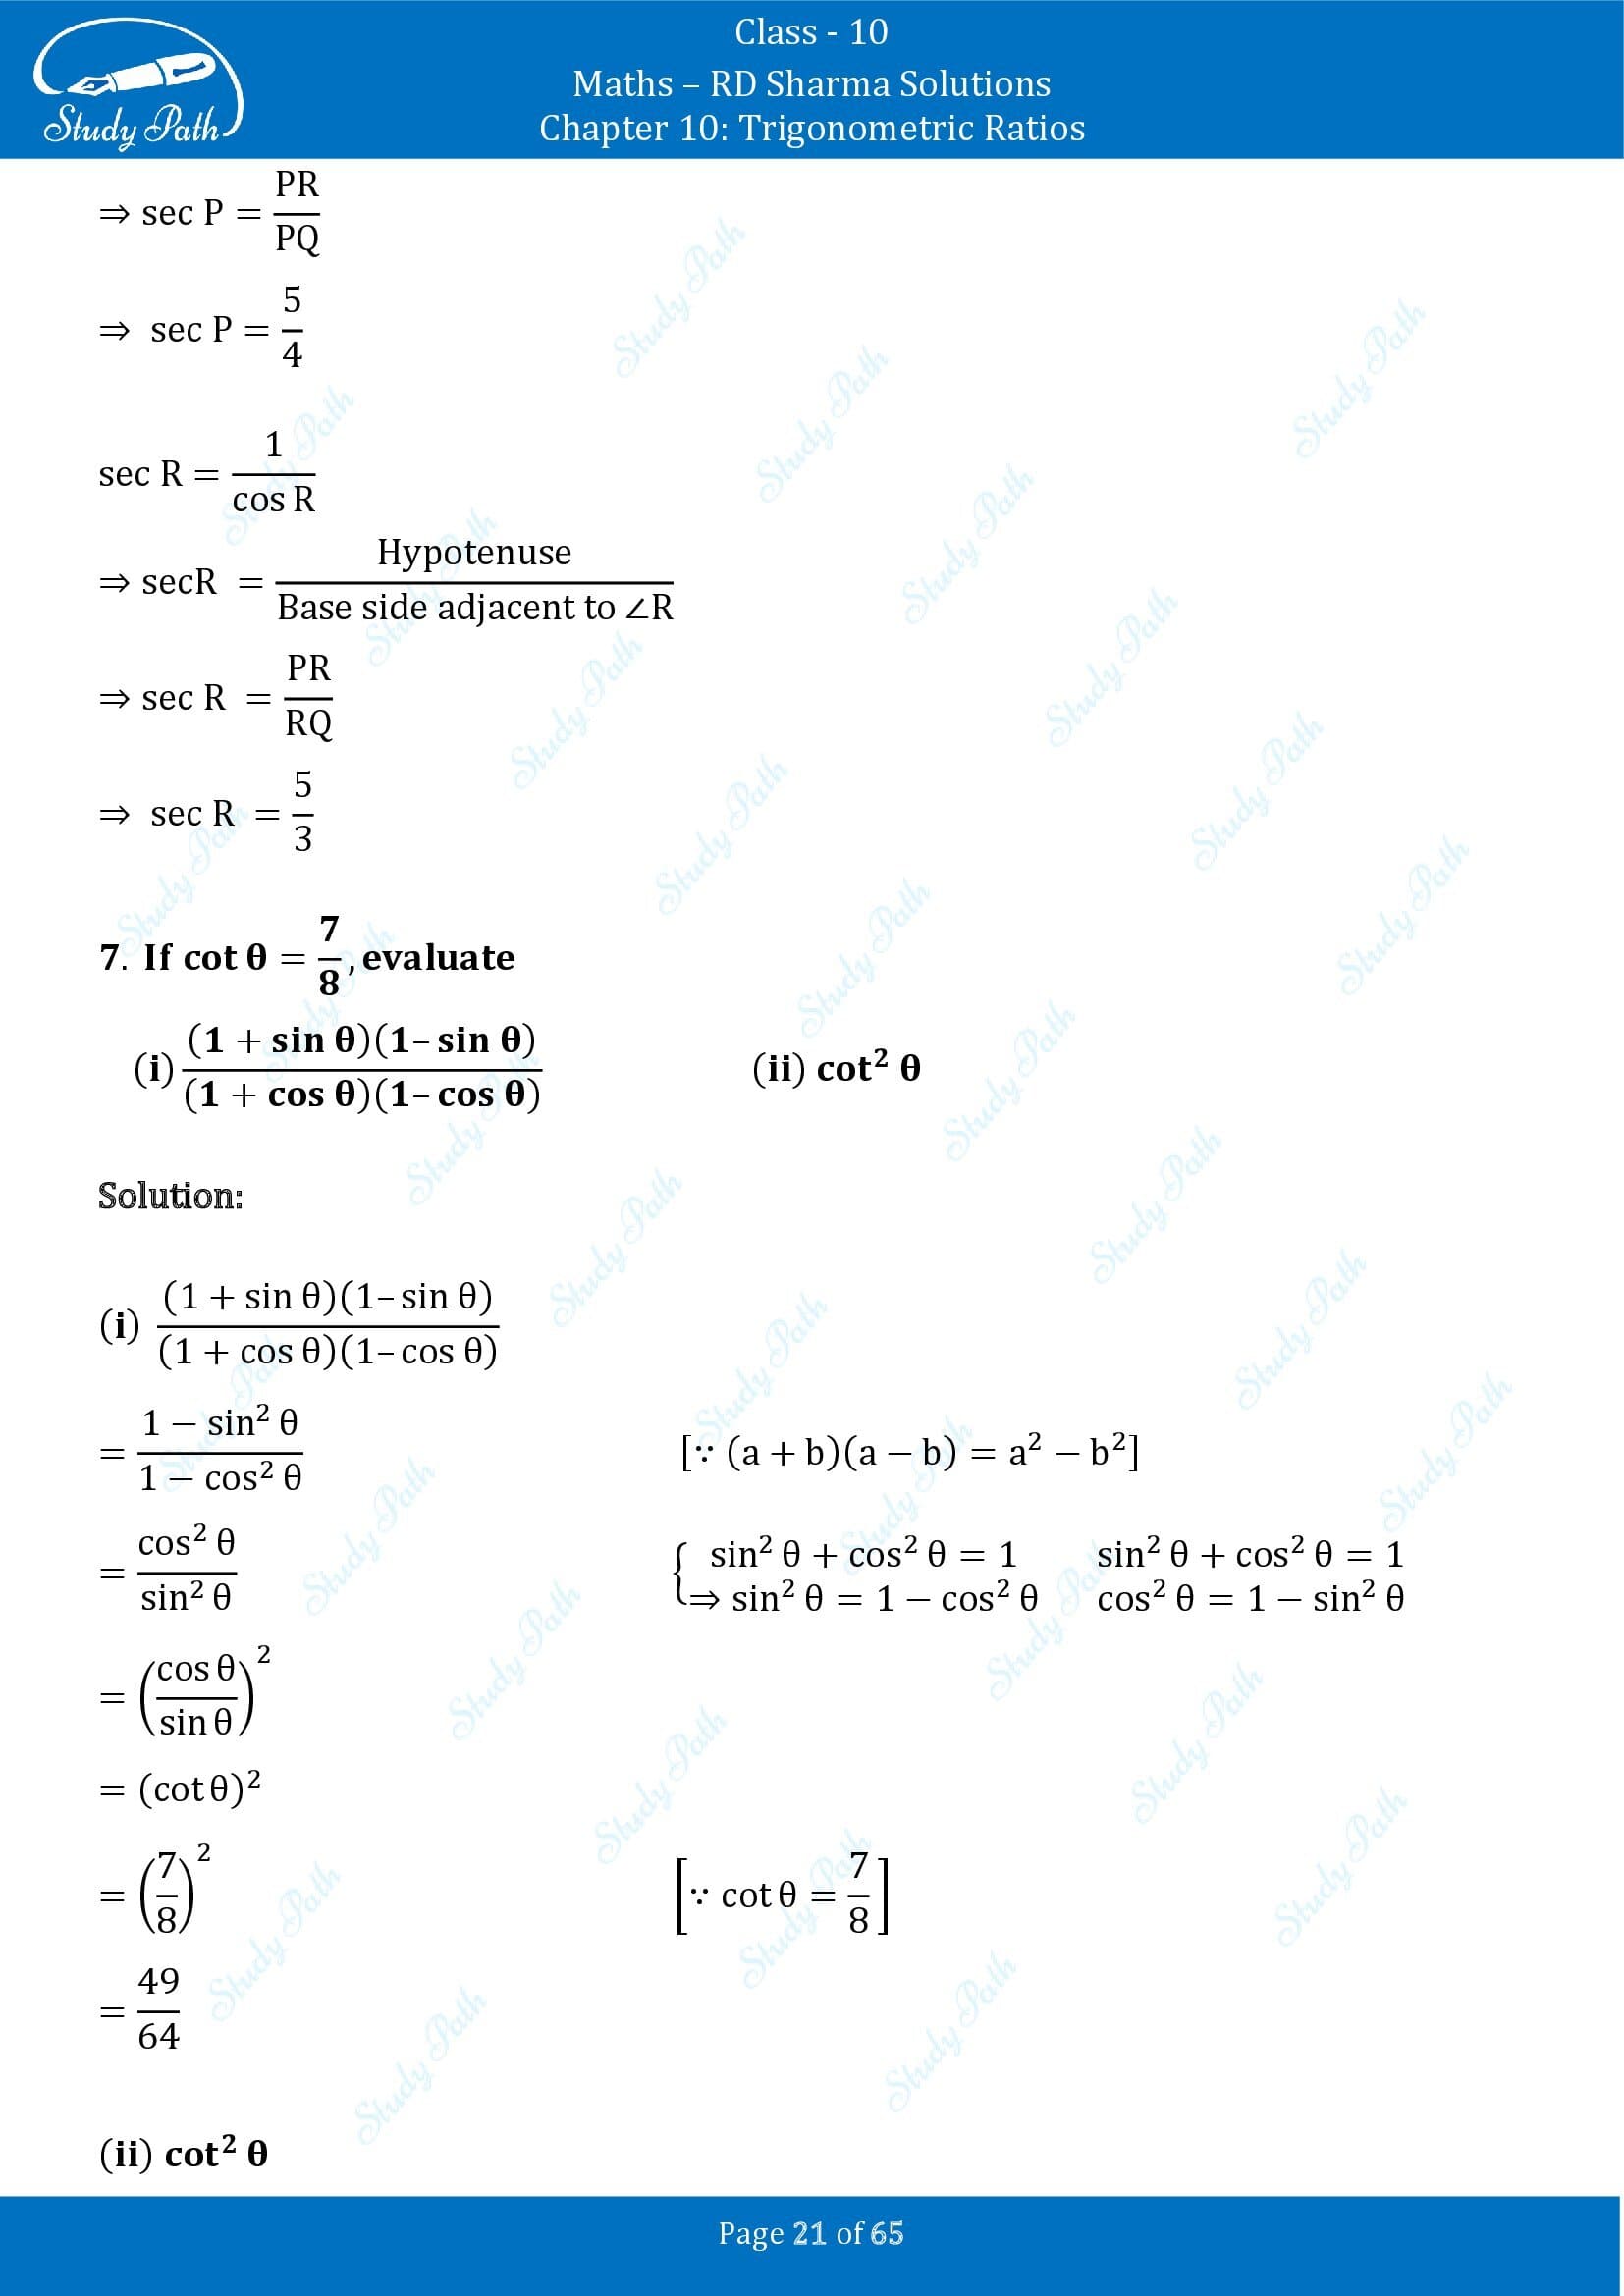 RD Sharma Solutions Class 10 Chapter 10 Trigonometric Ratios Exercise 10.1 00021